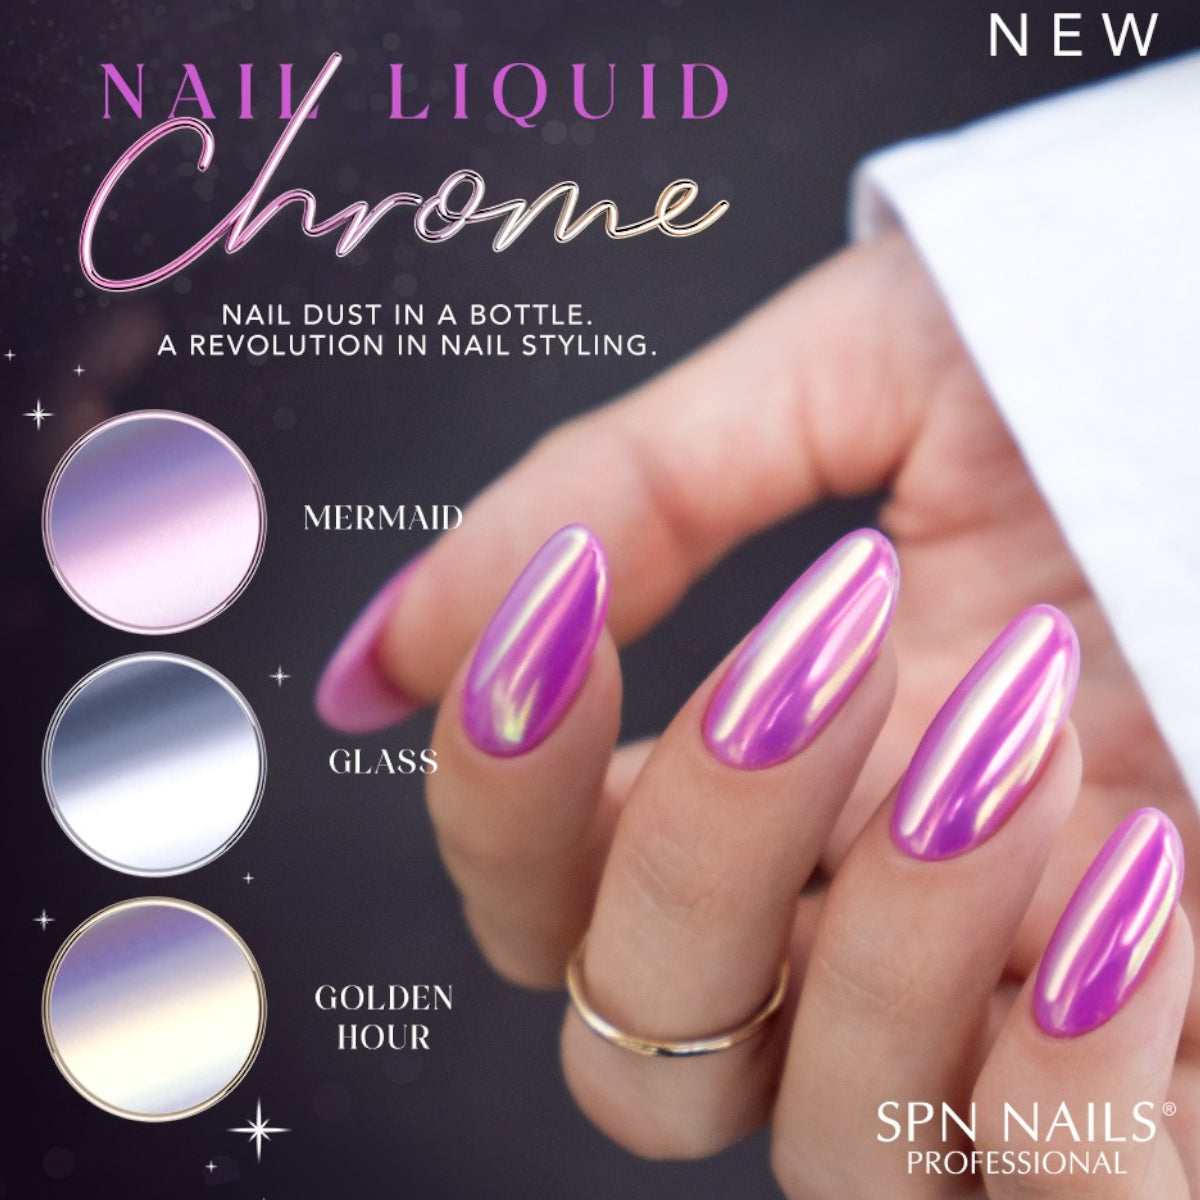 SPN Nails Nail Liquid Chrome Golden Hour Information